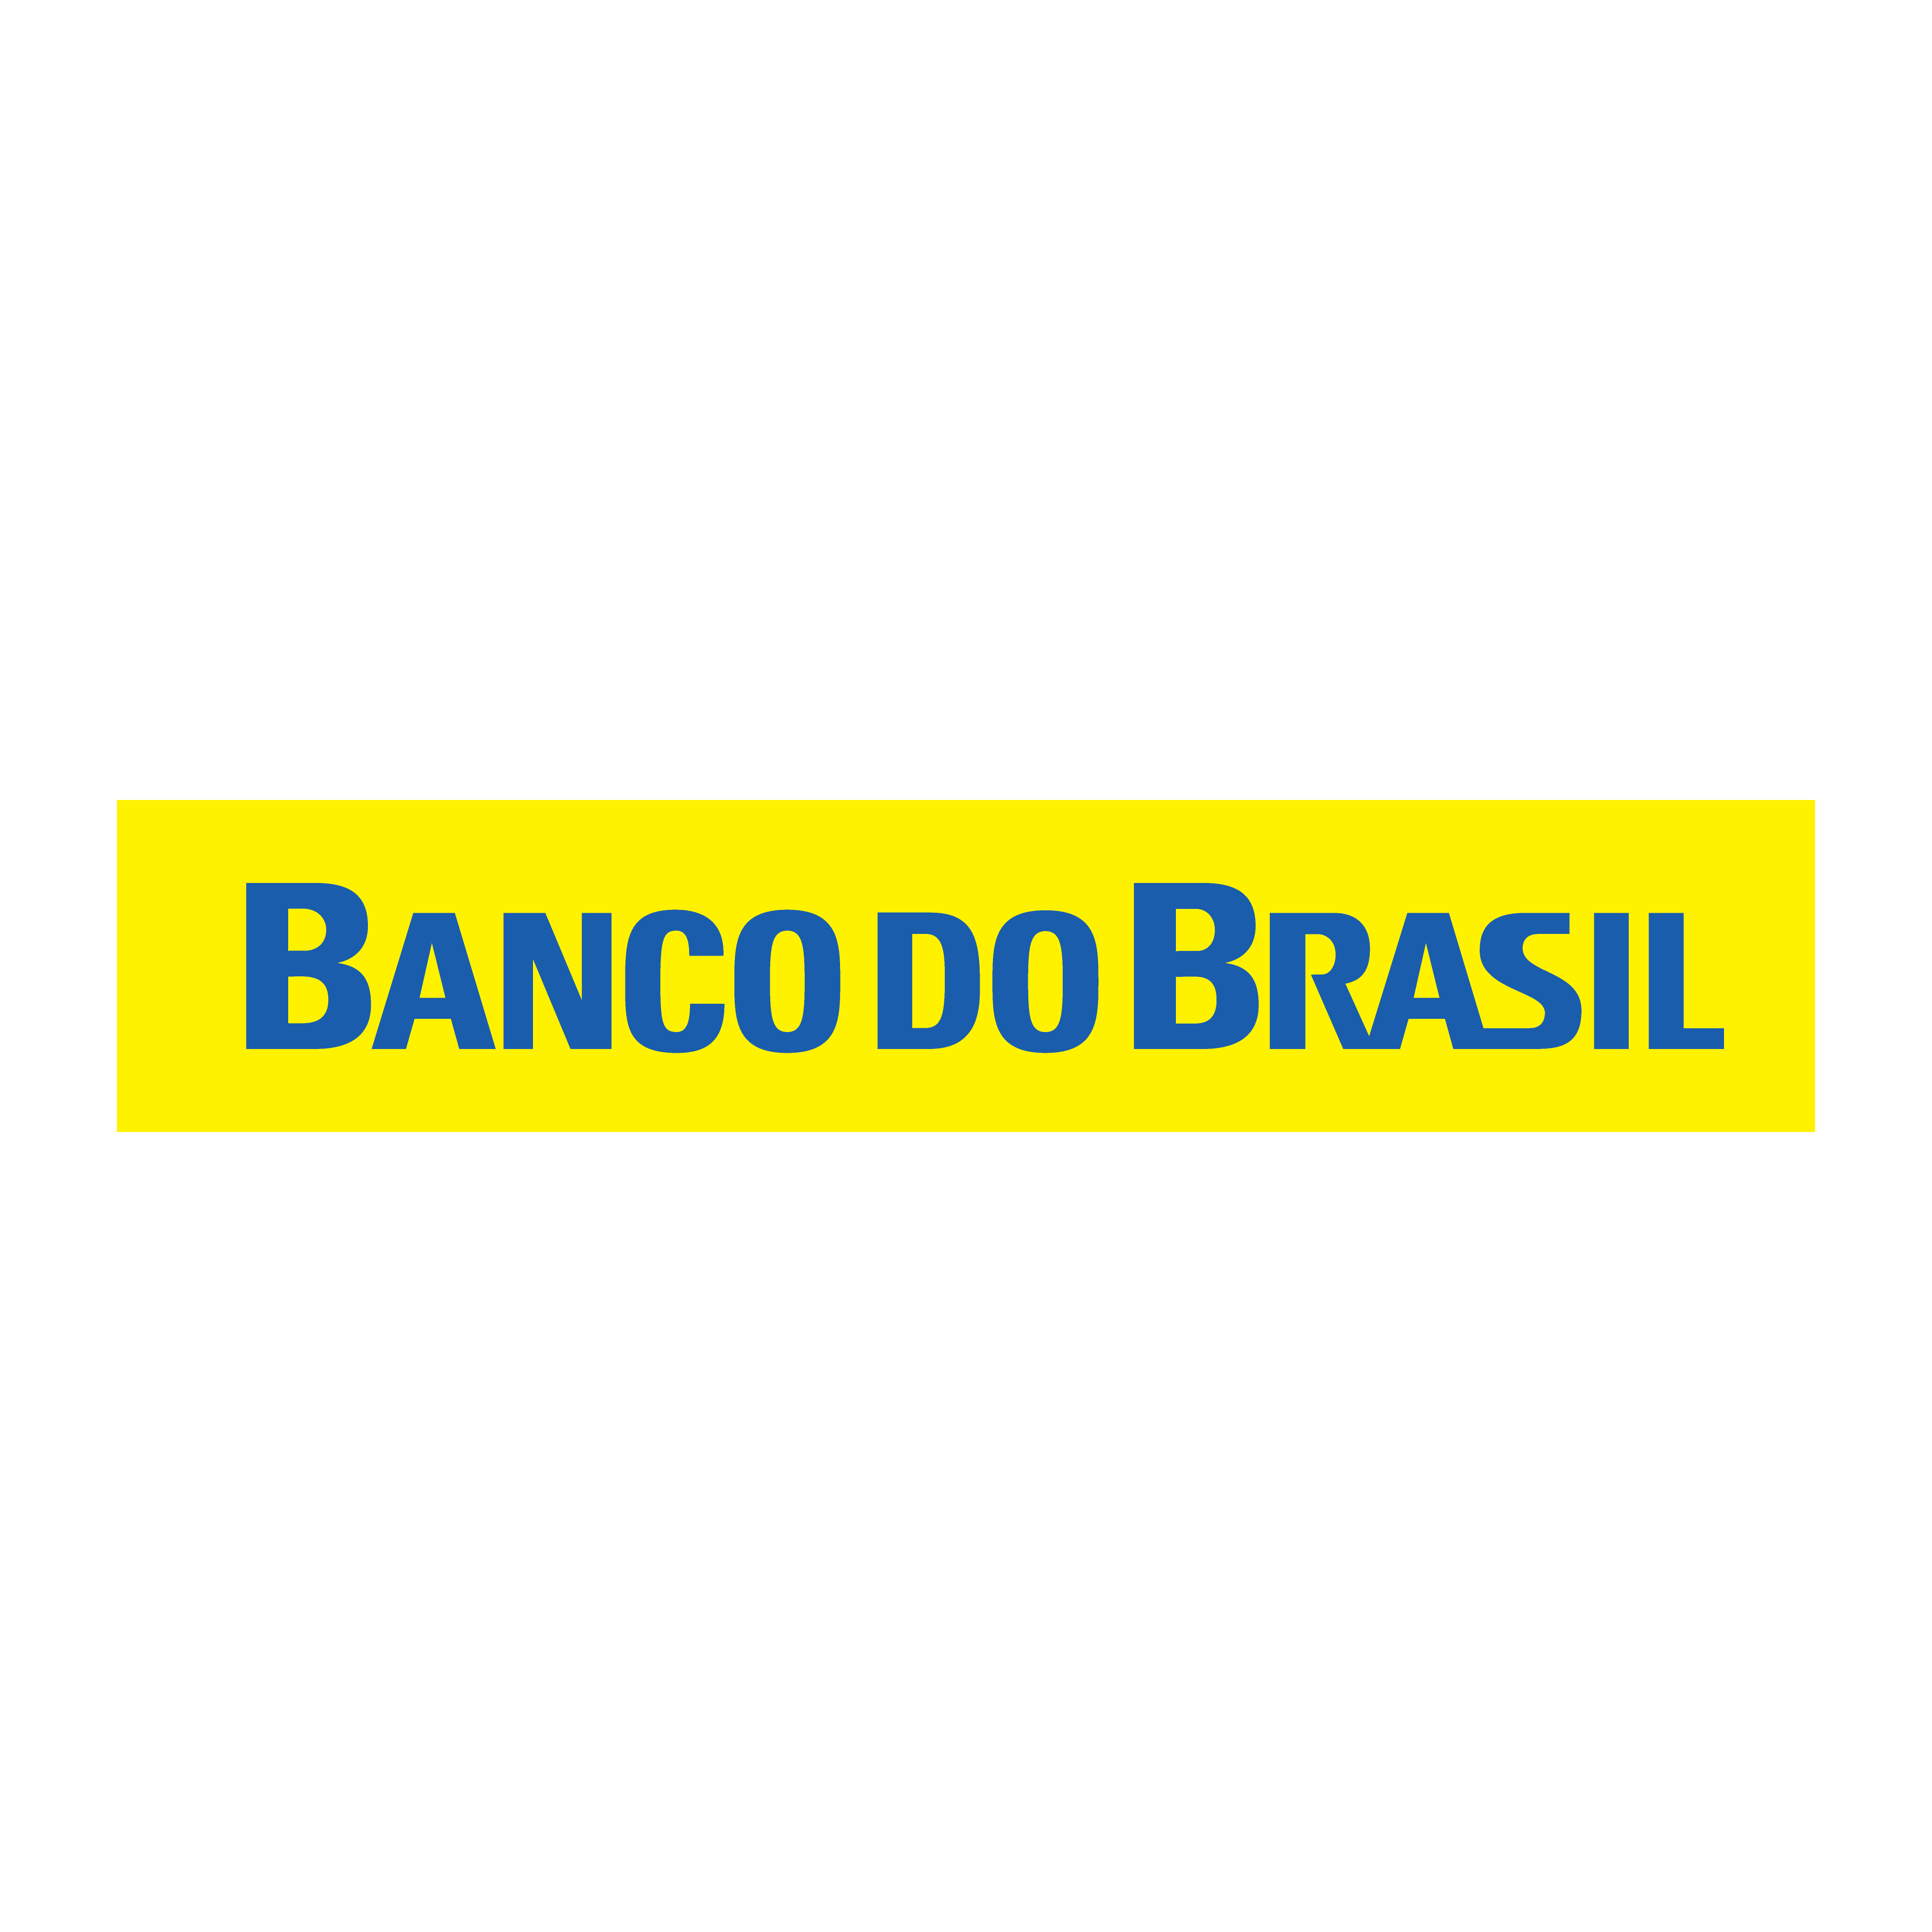 logo banco do brasil horizontal